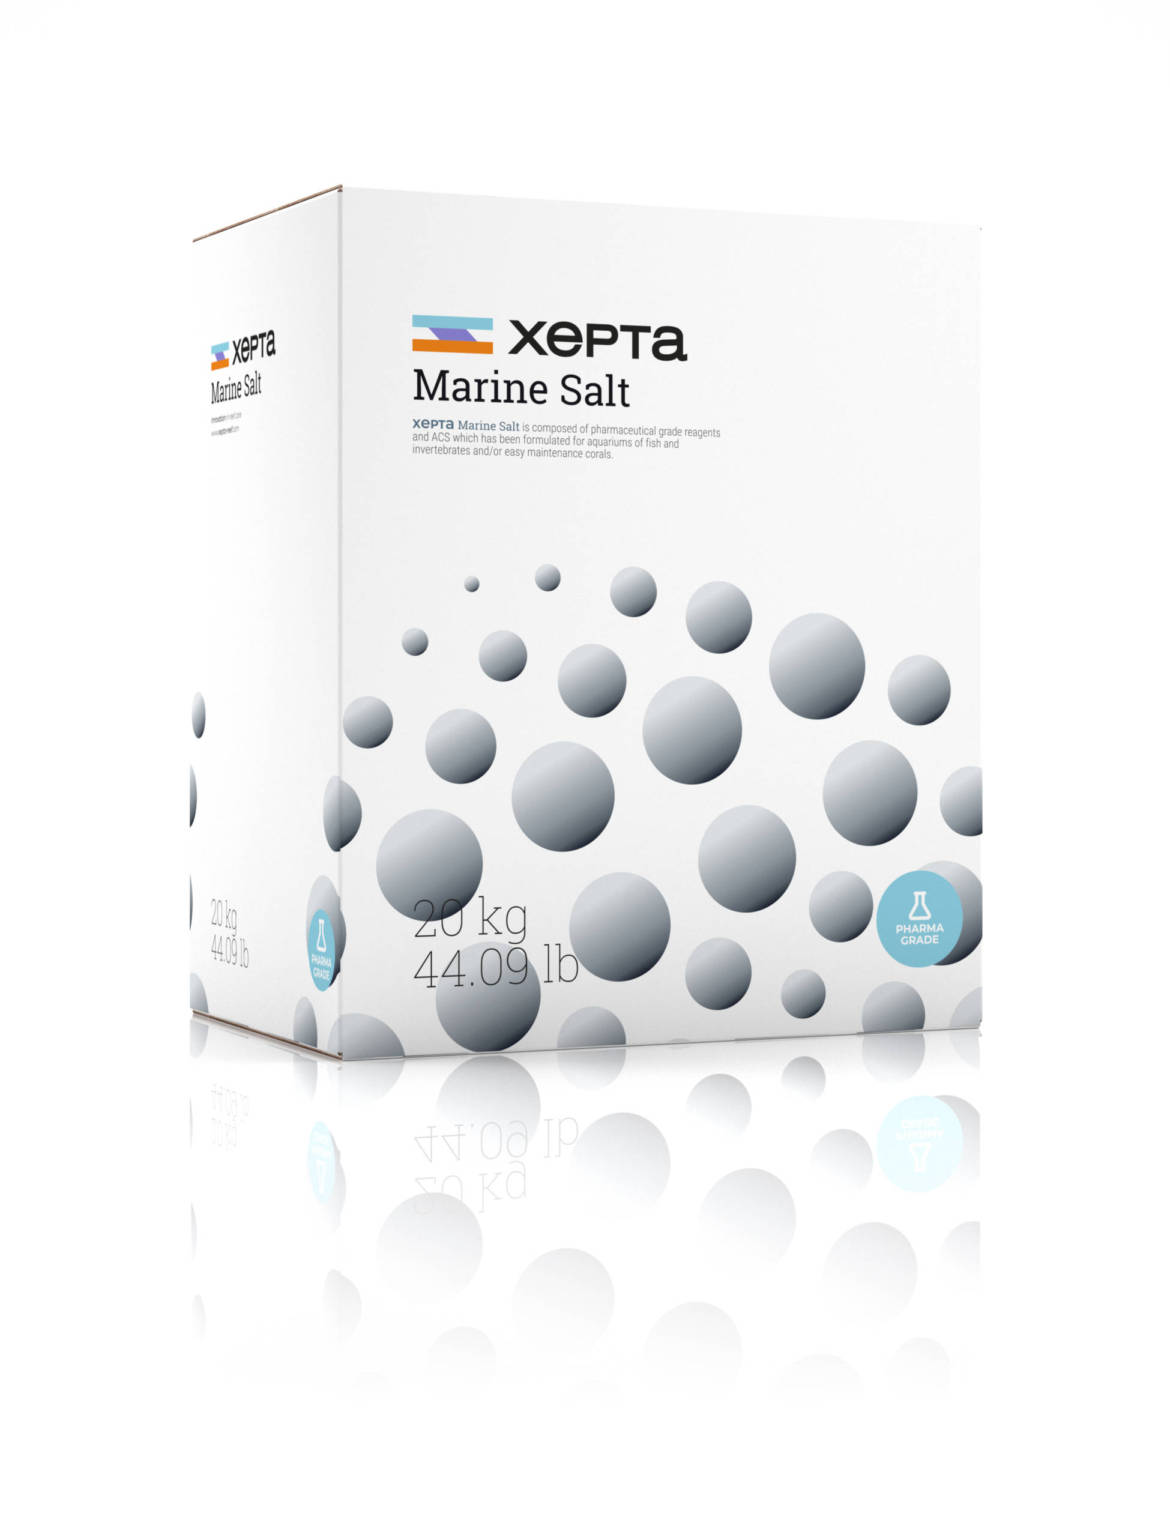 xepta-marine-salt-20kg-scaled.jpg